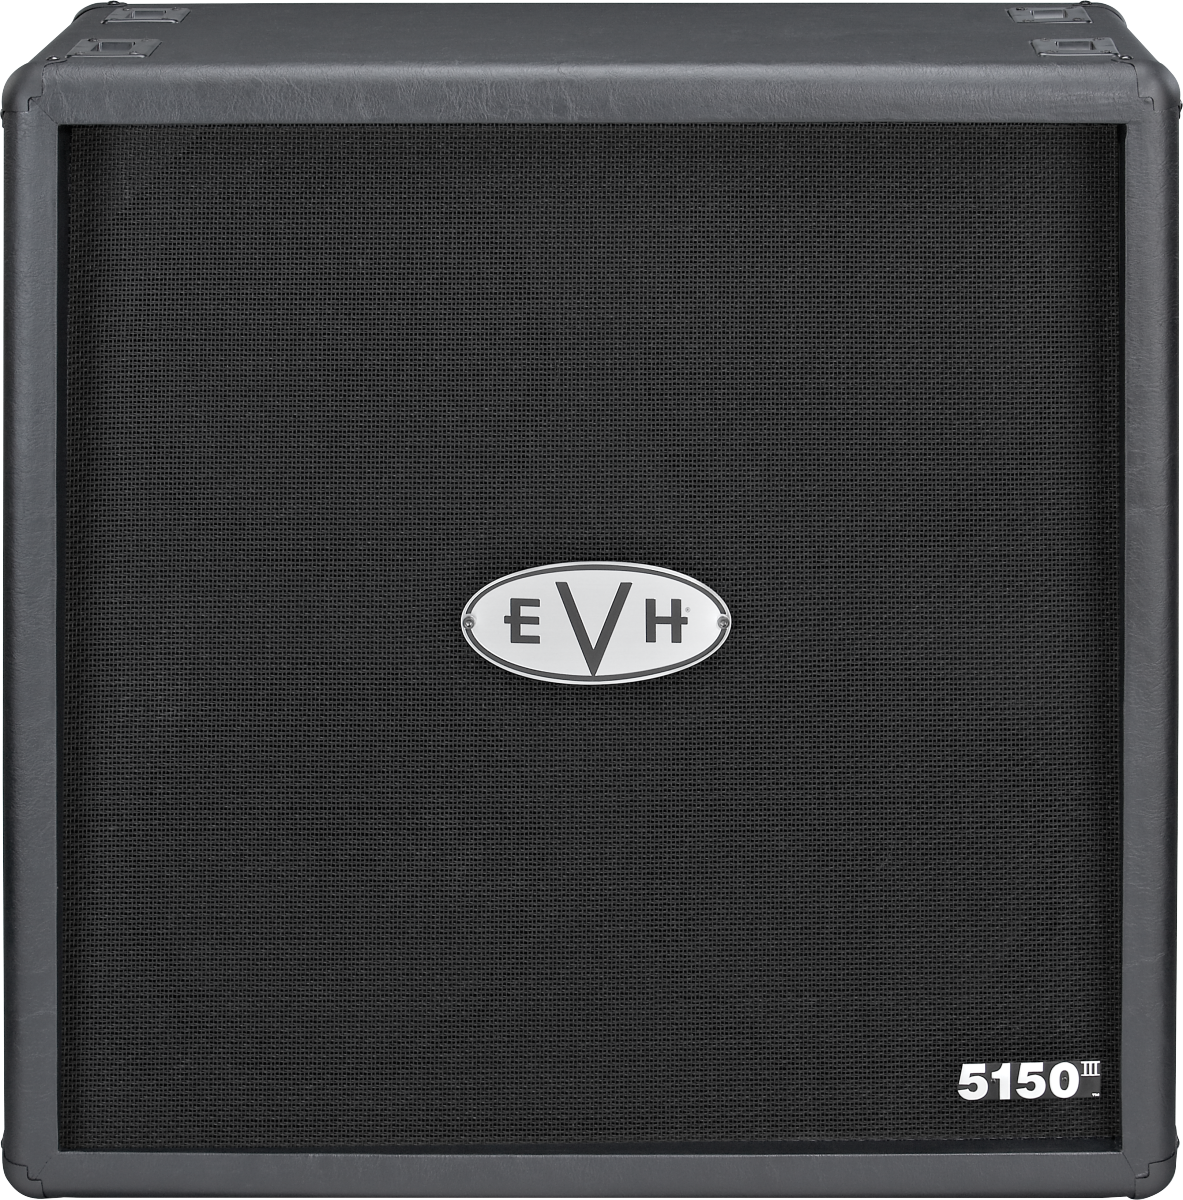 EVH 5150III 4x12 Straight Cabinet, Black 2252100000